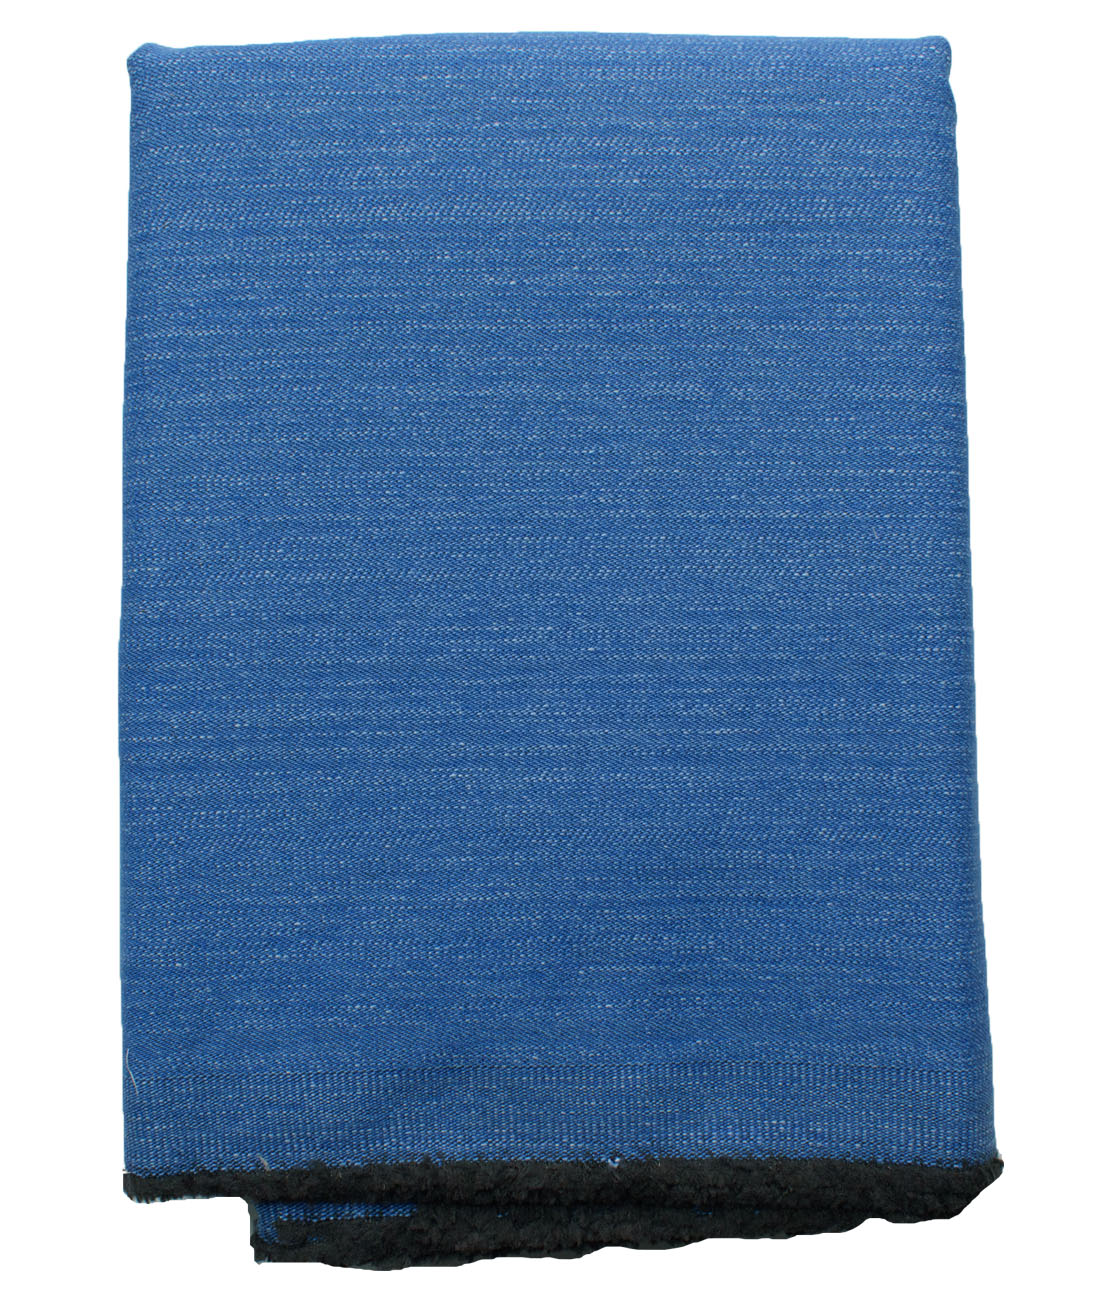 Arvind Men's Cotton Solids Unstitched Stretchable Jeans Fabric (Ice Blue)